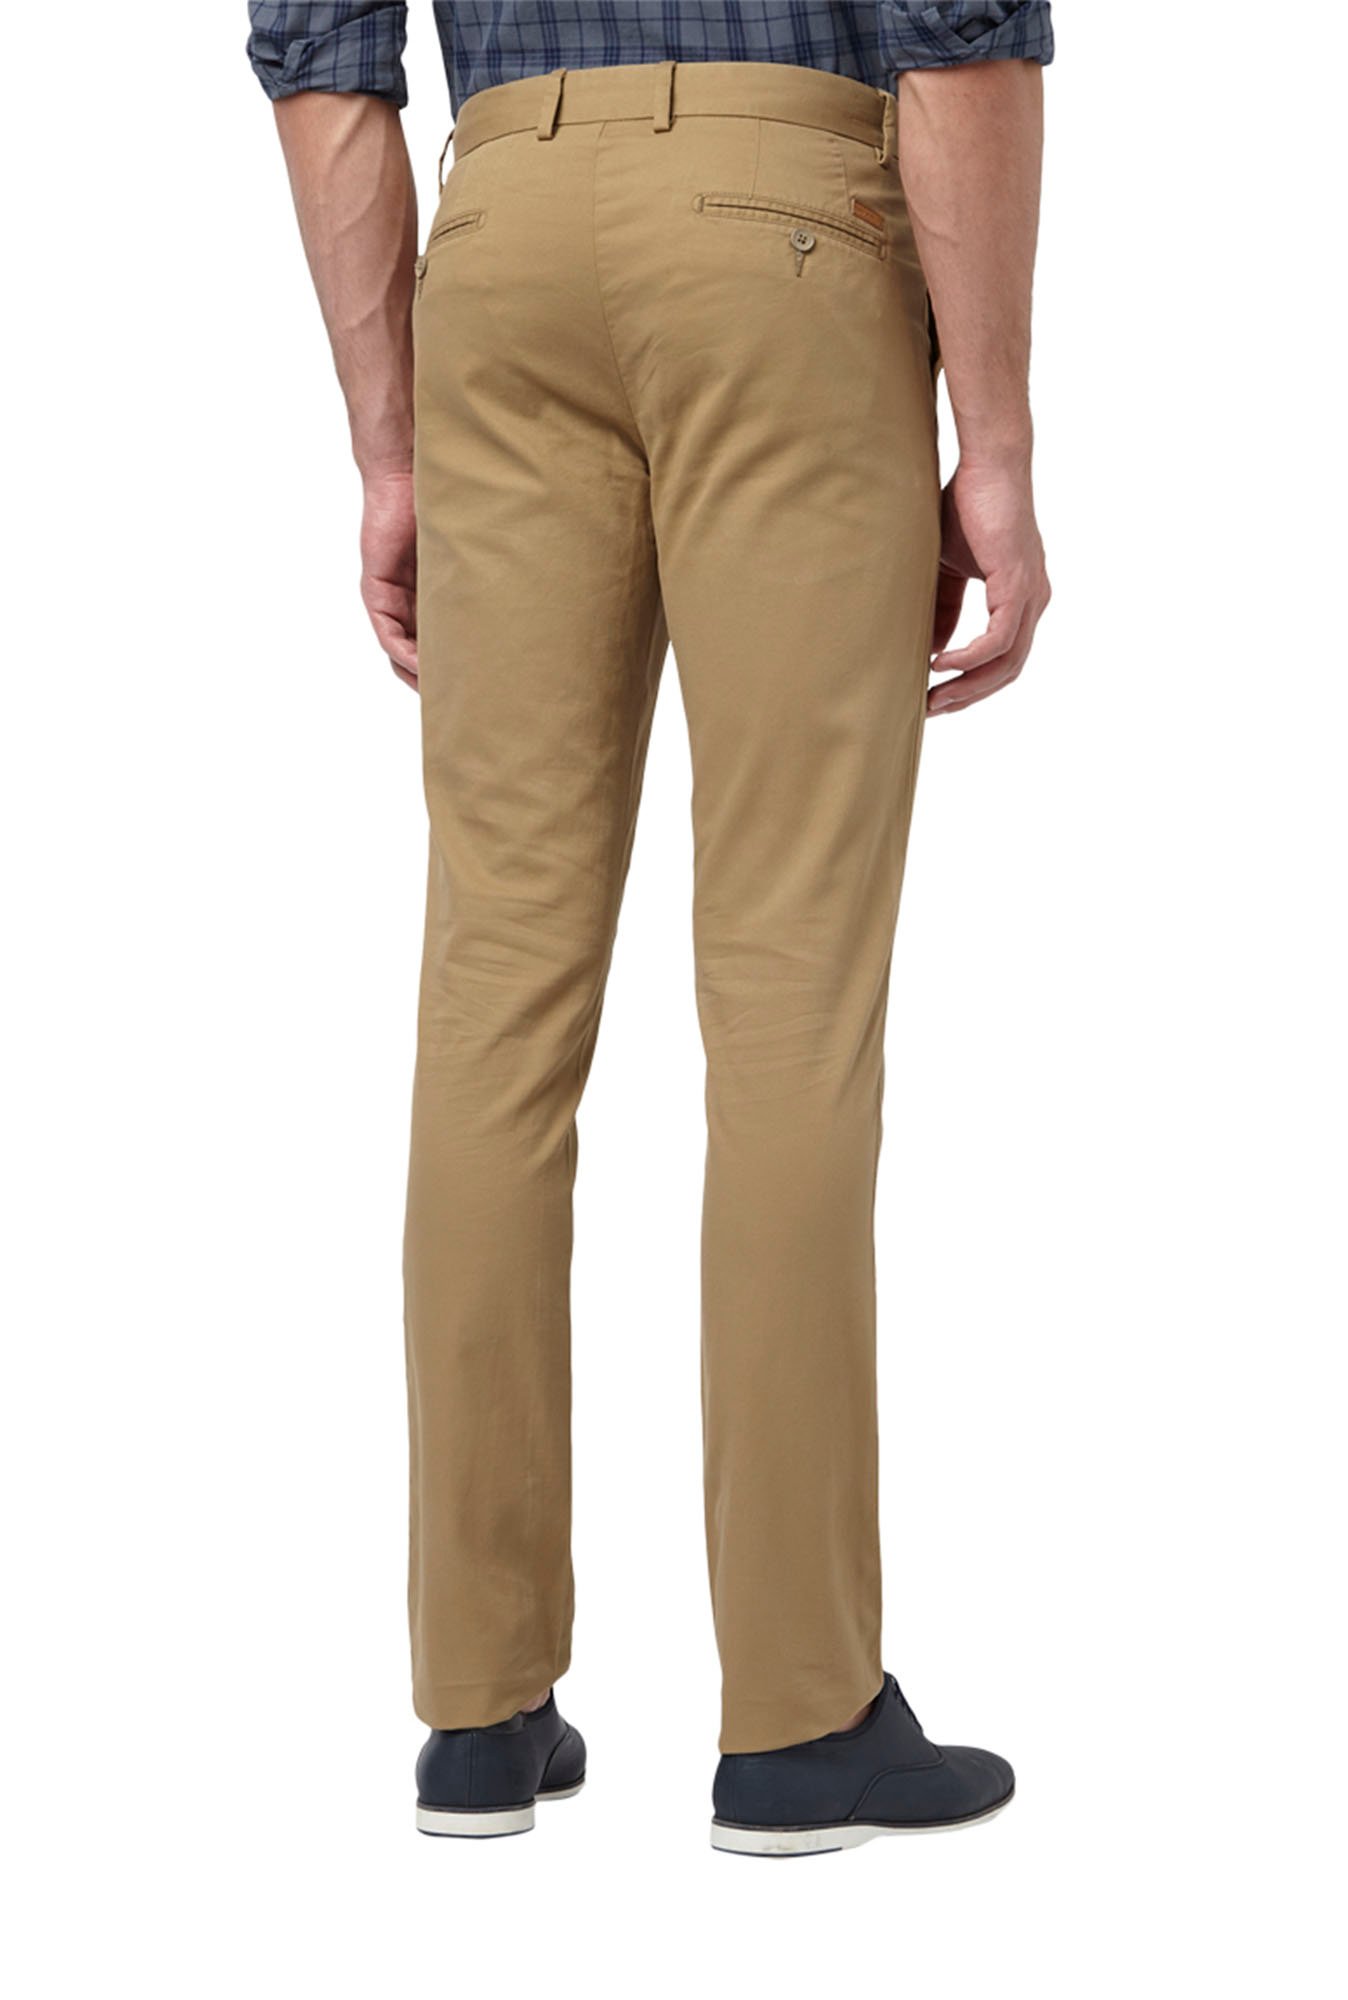 Buy Park Avenue Khaki Pleated Slim Fit Cotton Trousers for Men Online   Tata CLiQ